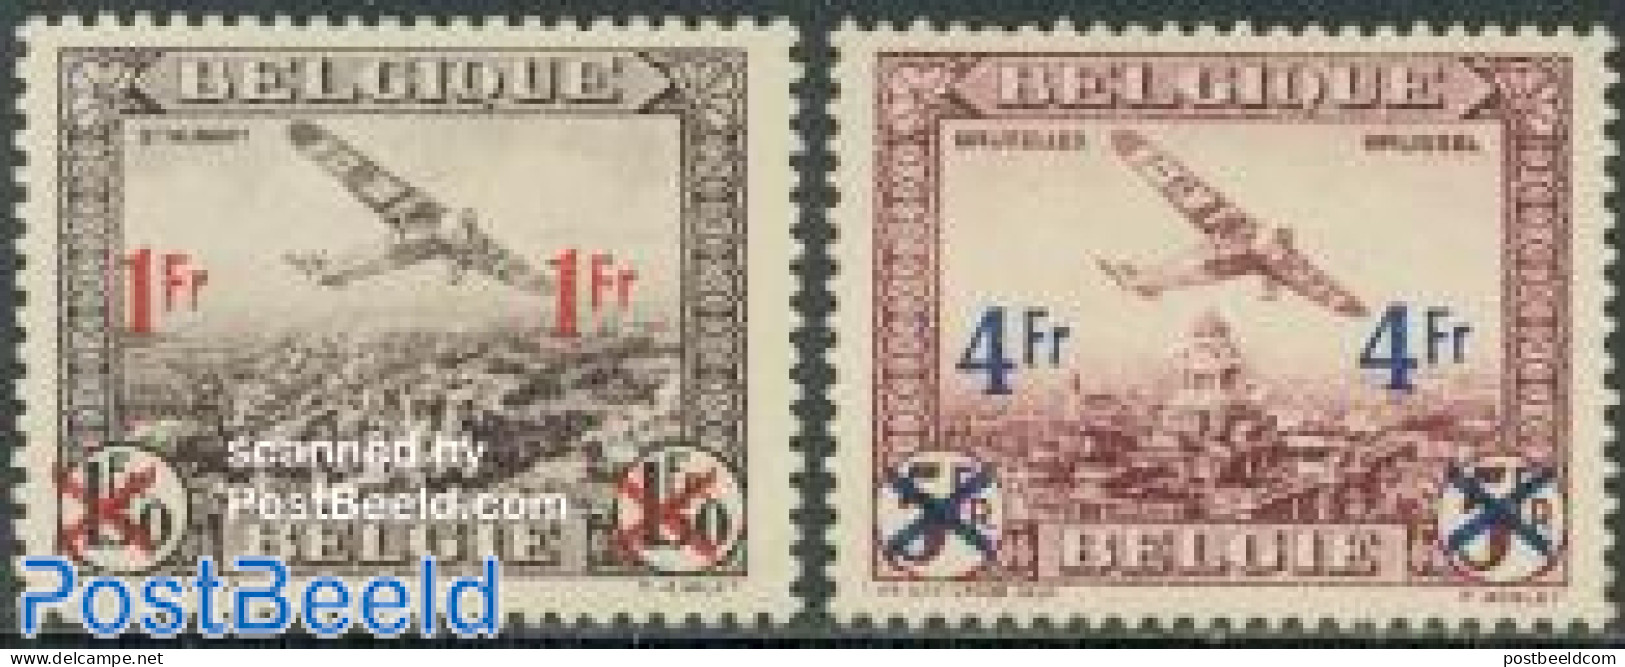 Belgium 1935 Airmail Overprints 2v, Mint NH, Transport - Aircraft & Aviation - Nuevos